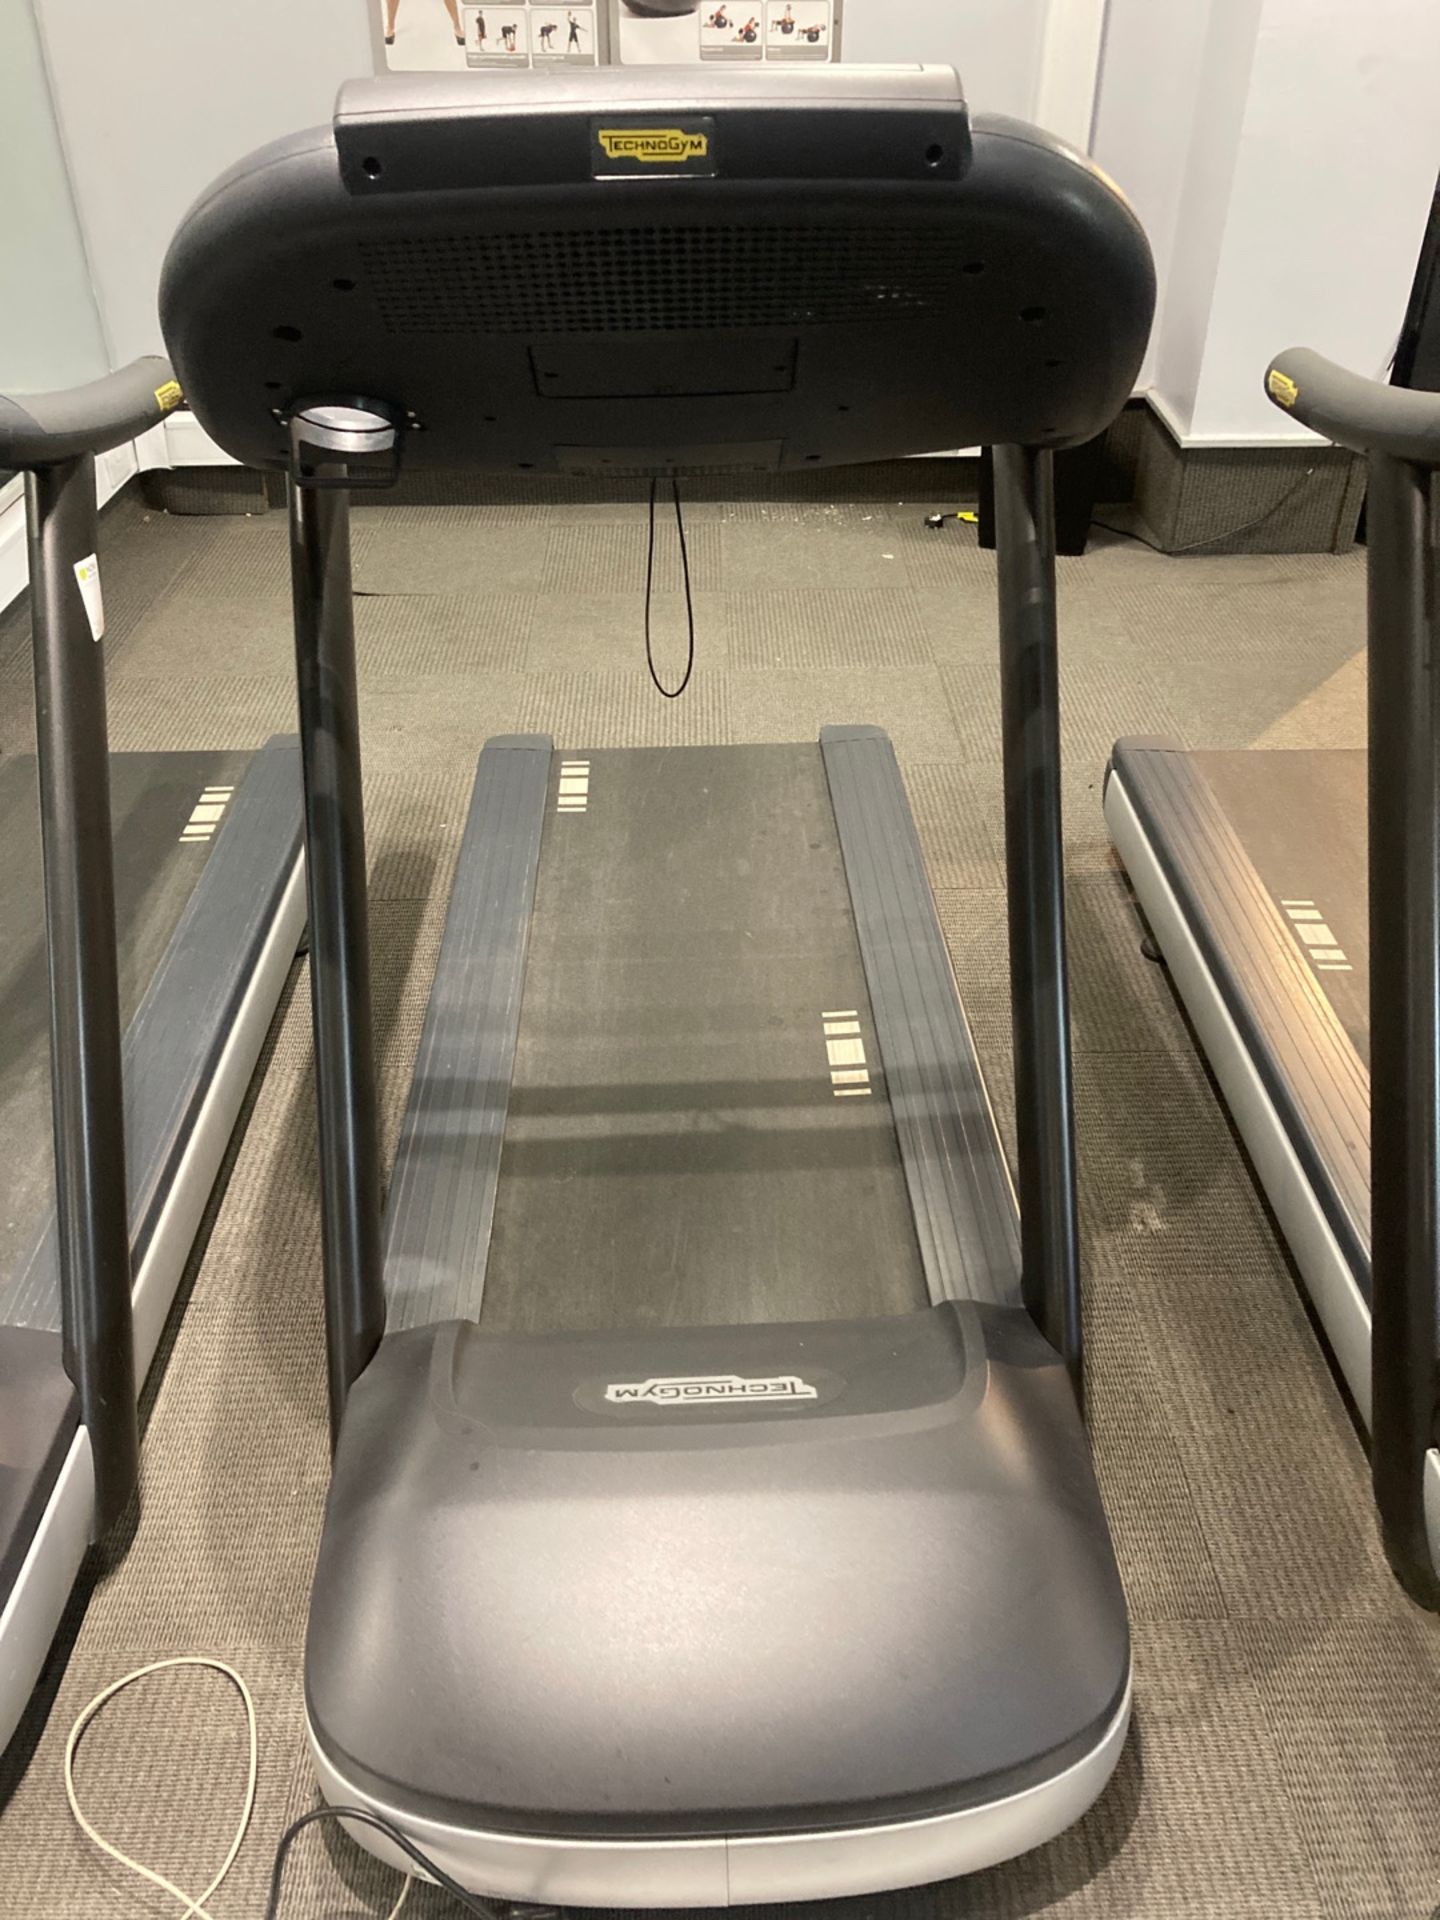 Techno Gym Fitness Treadmill - Image 4 of 4